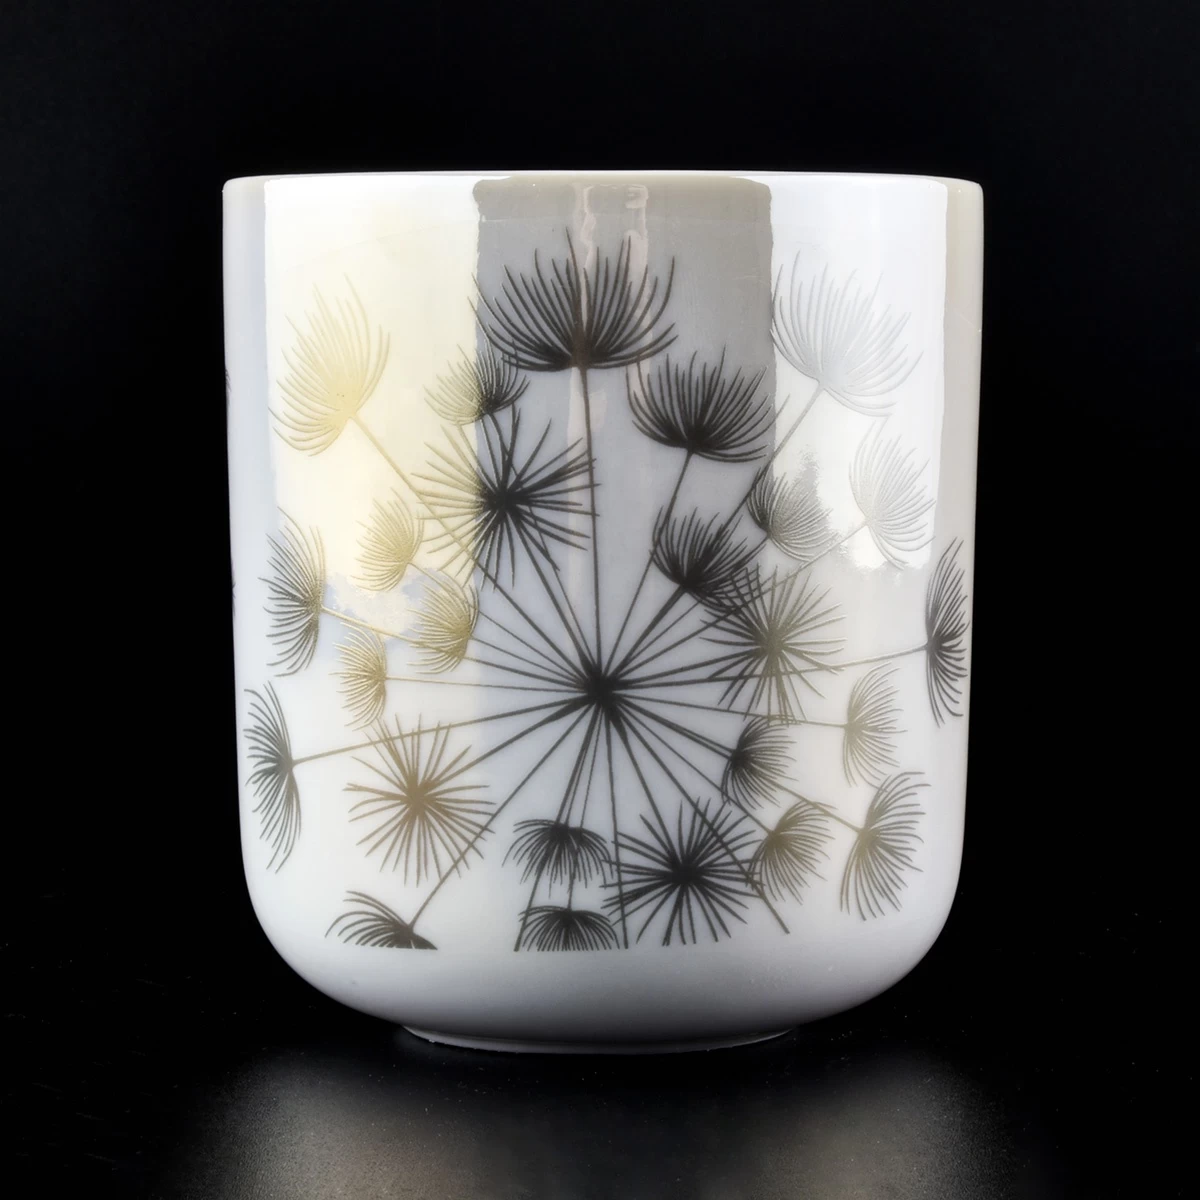 Glossy White Ceramic Candle Holder Wholesale